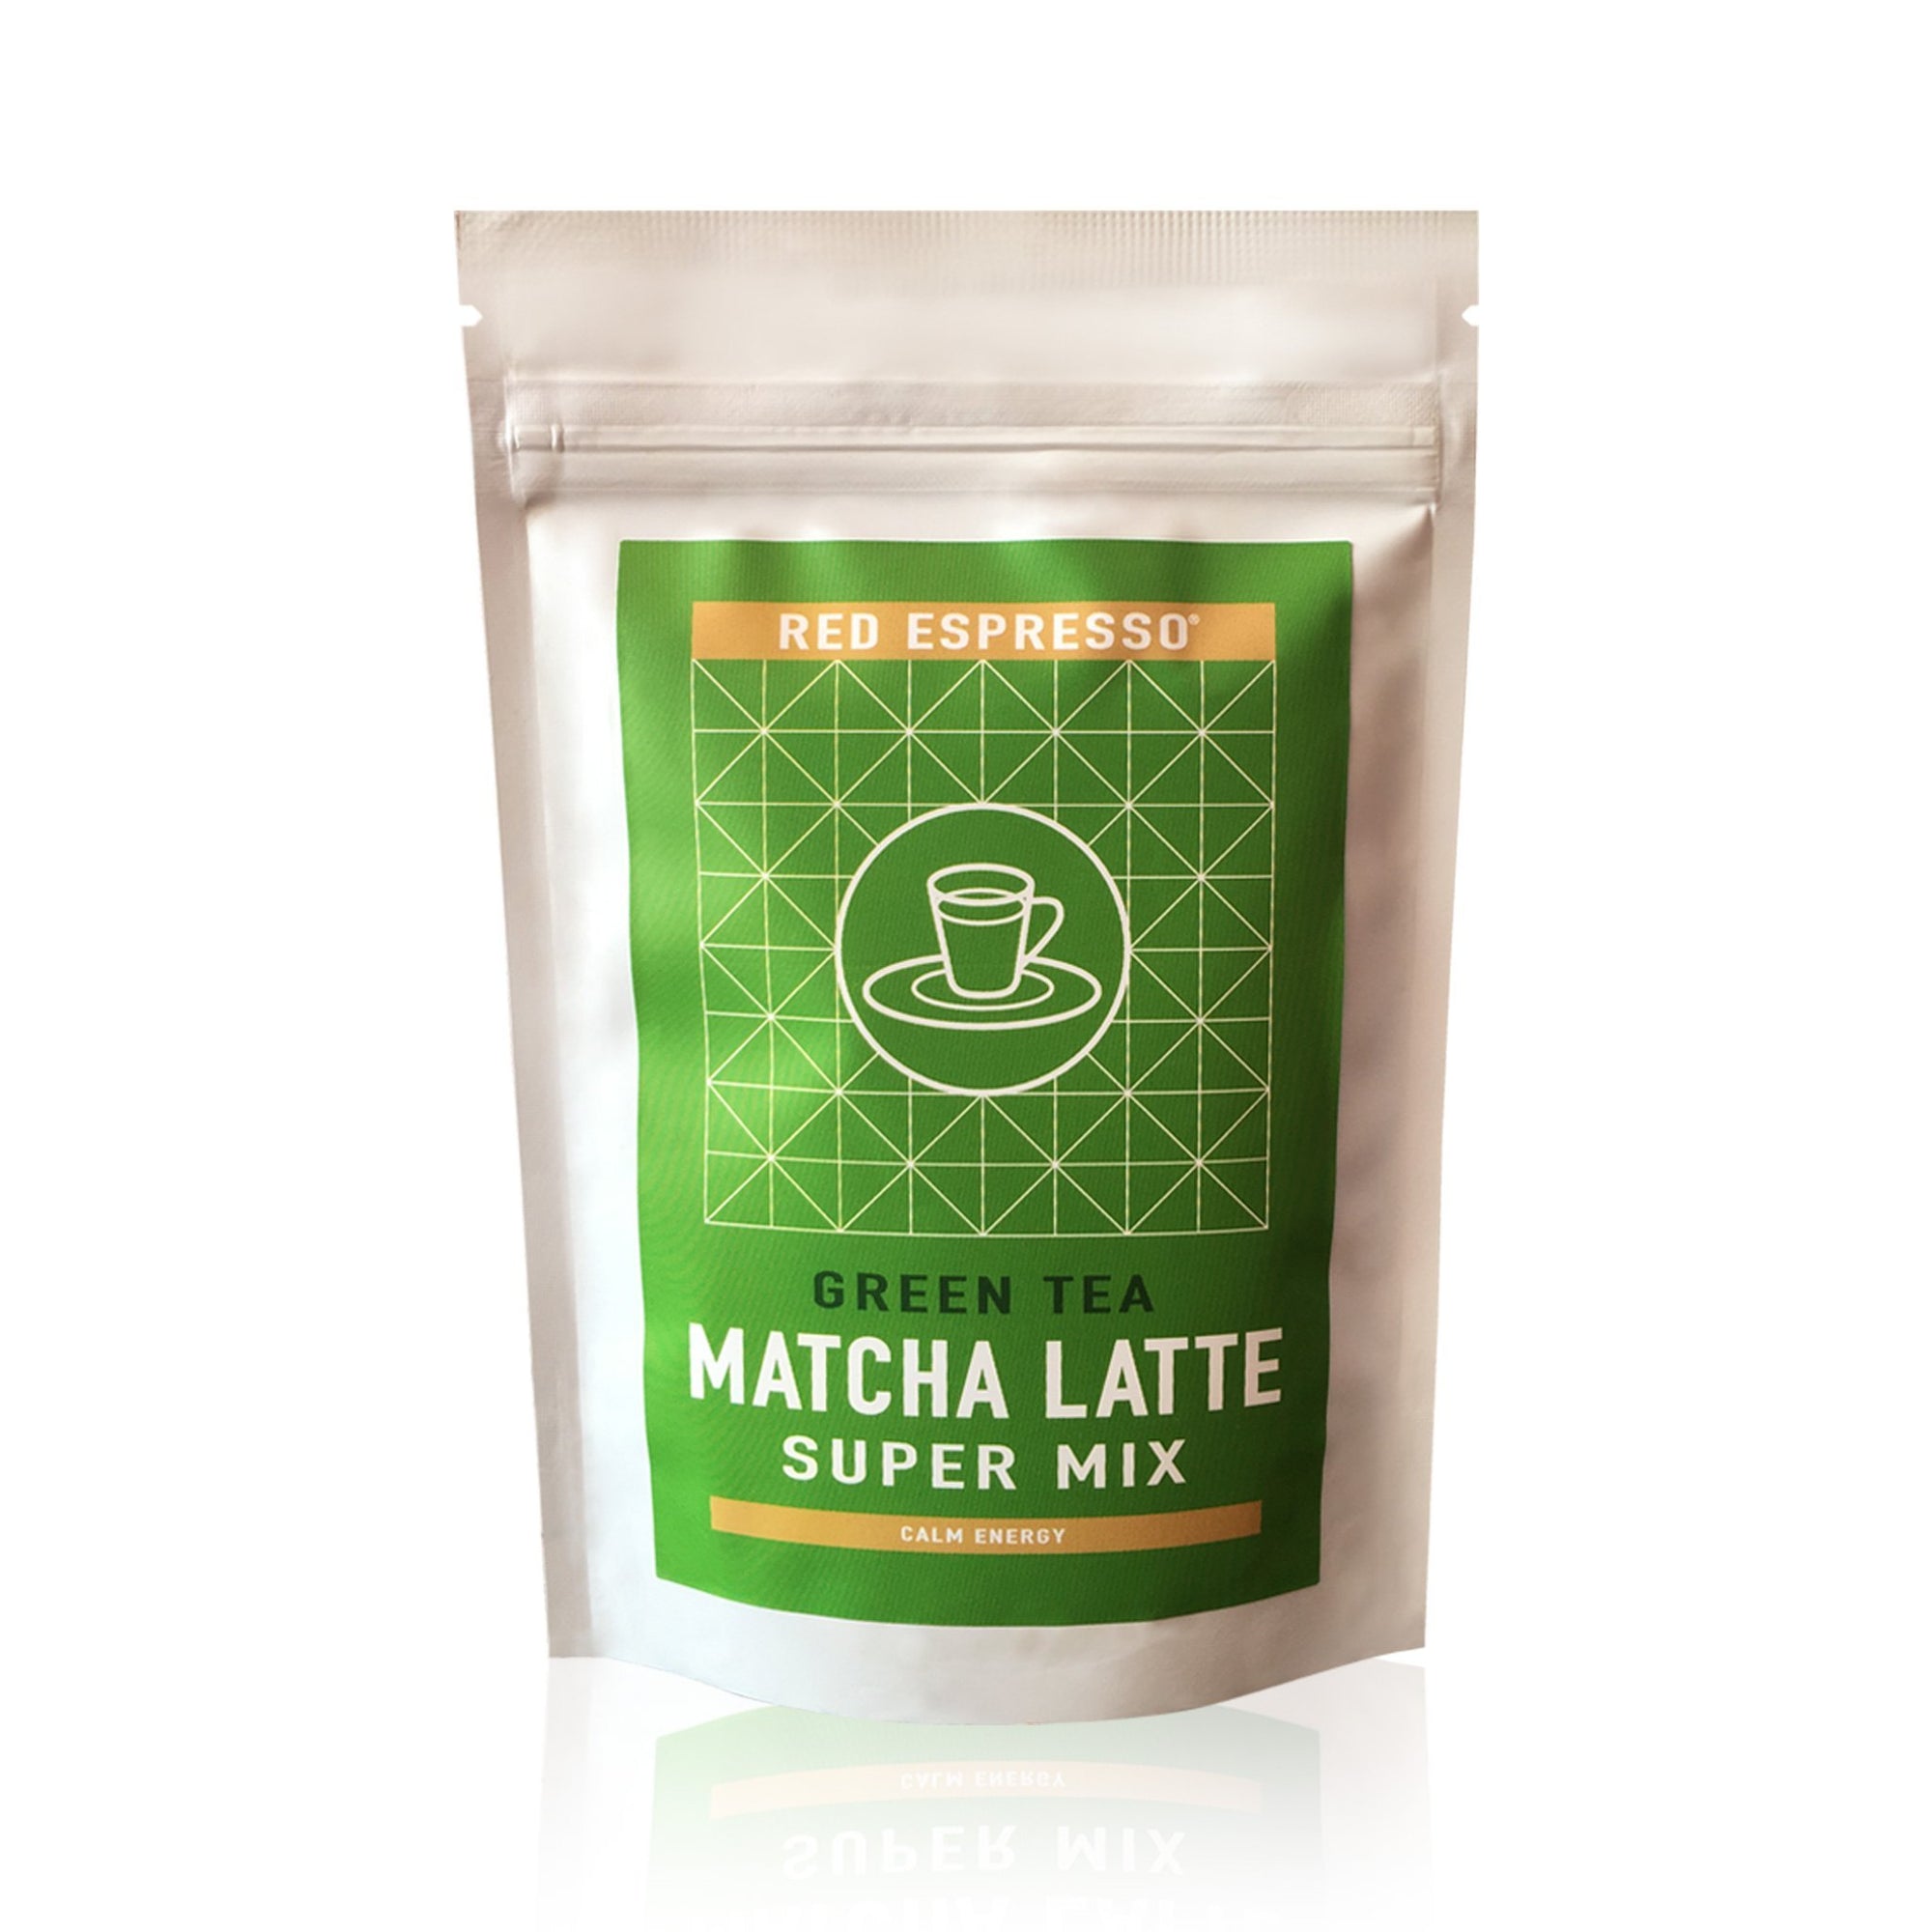 green tea matcha latte mix from red espresso brand